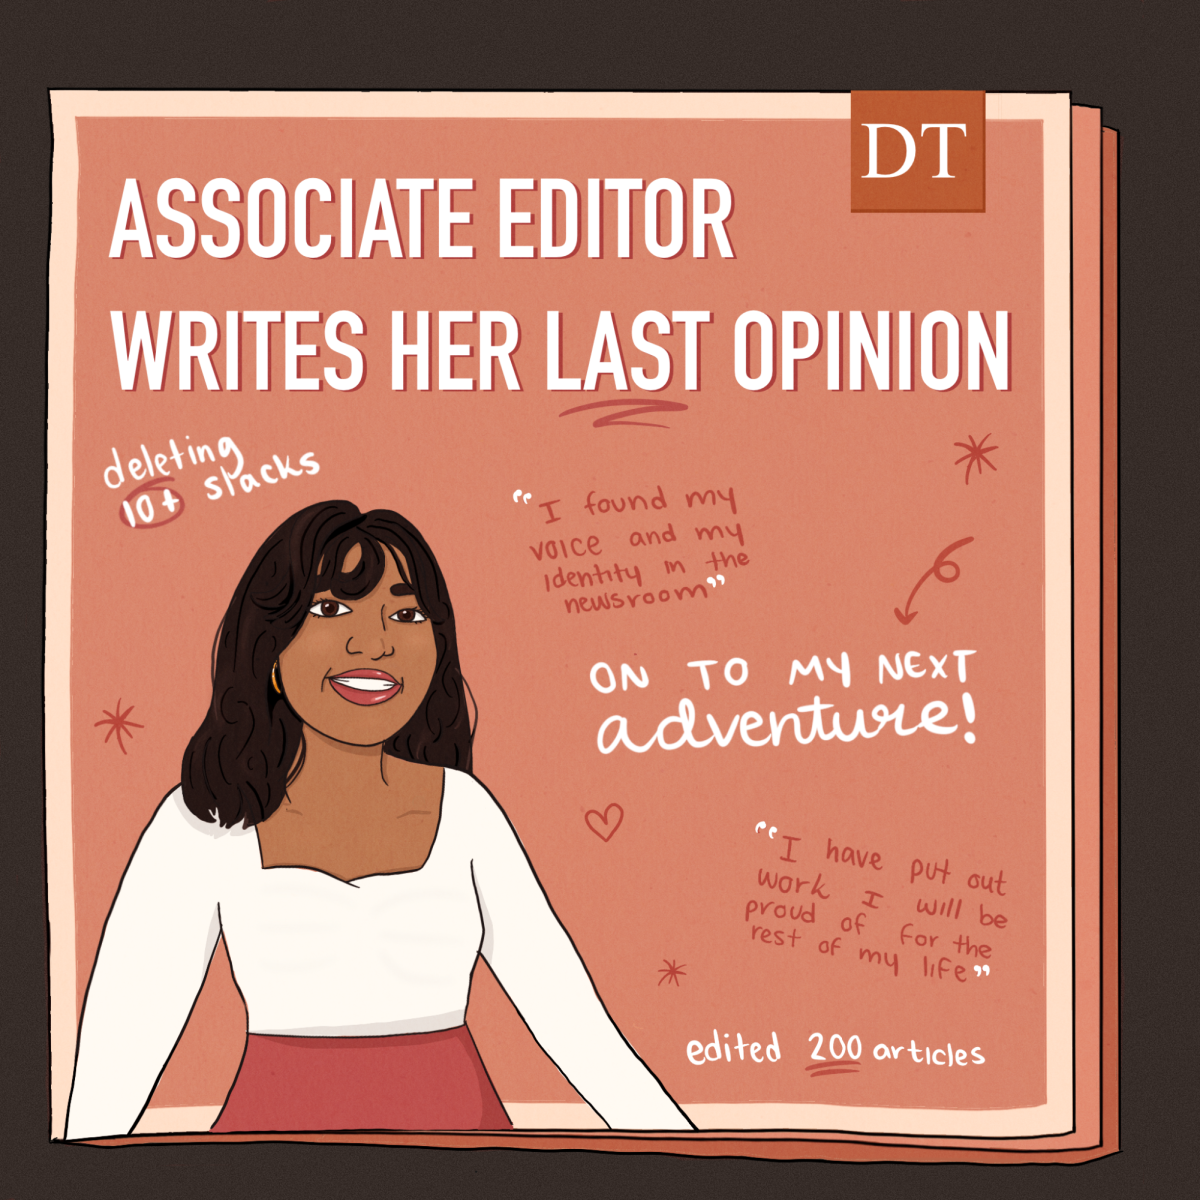 Associate Editor writes her last opinion